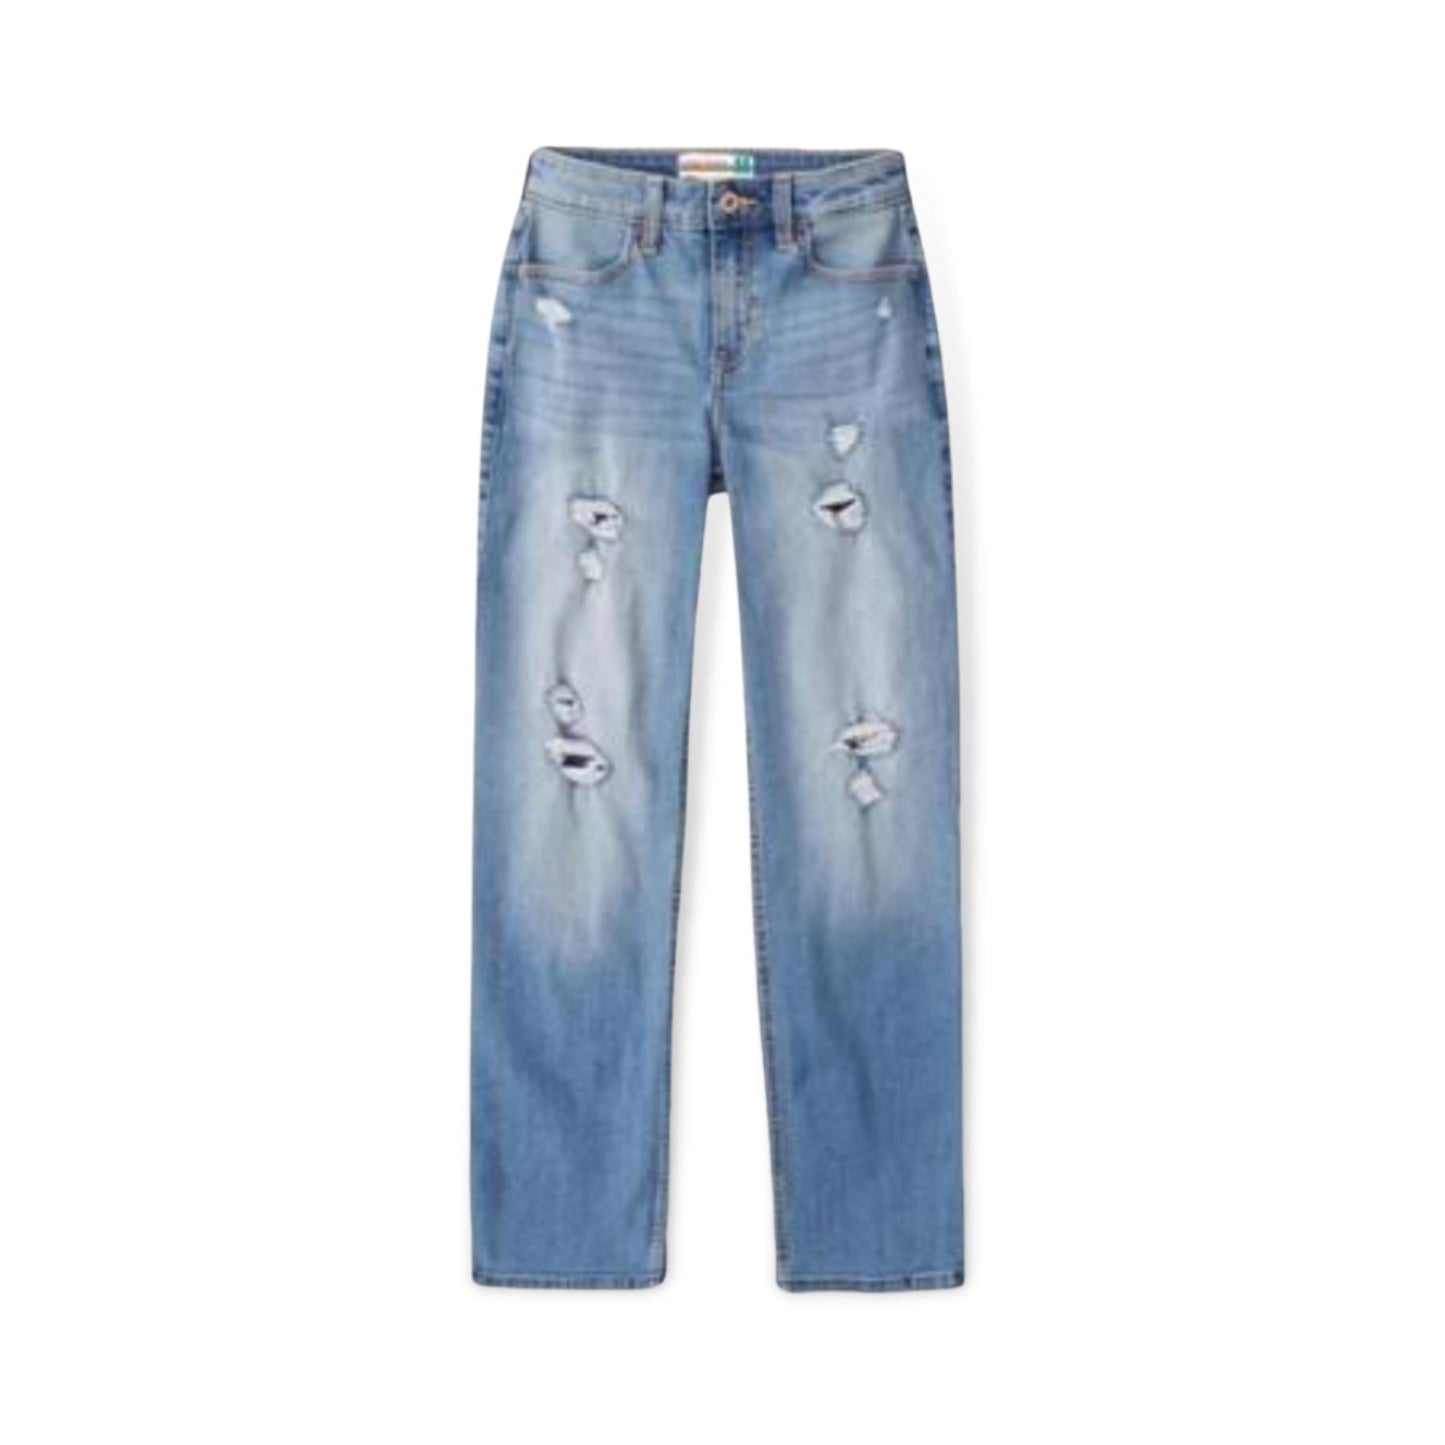 Vintage Havana Light Medium Wash High Rise Distressed Straight Leg Jean - a Spirit Animal - jeans $30-$60 $60-$90 10